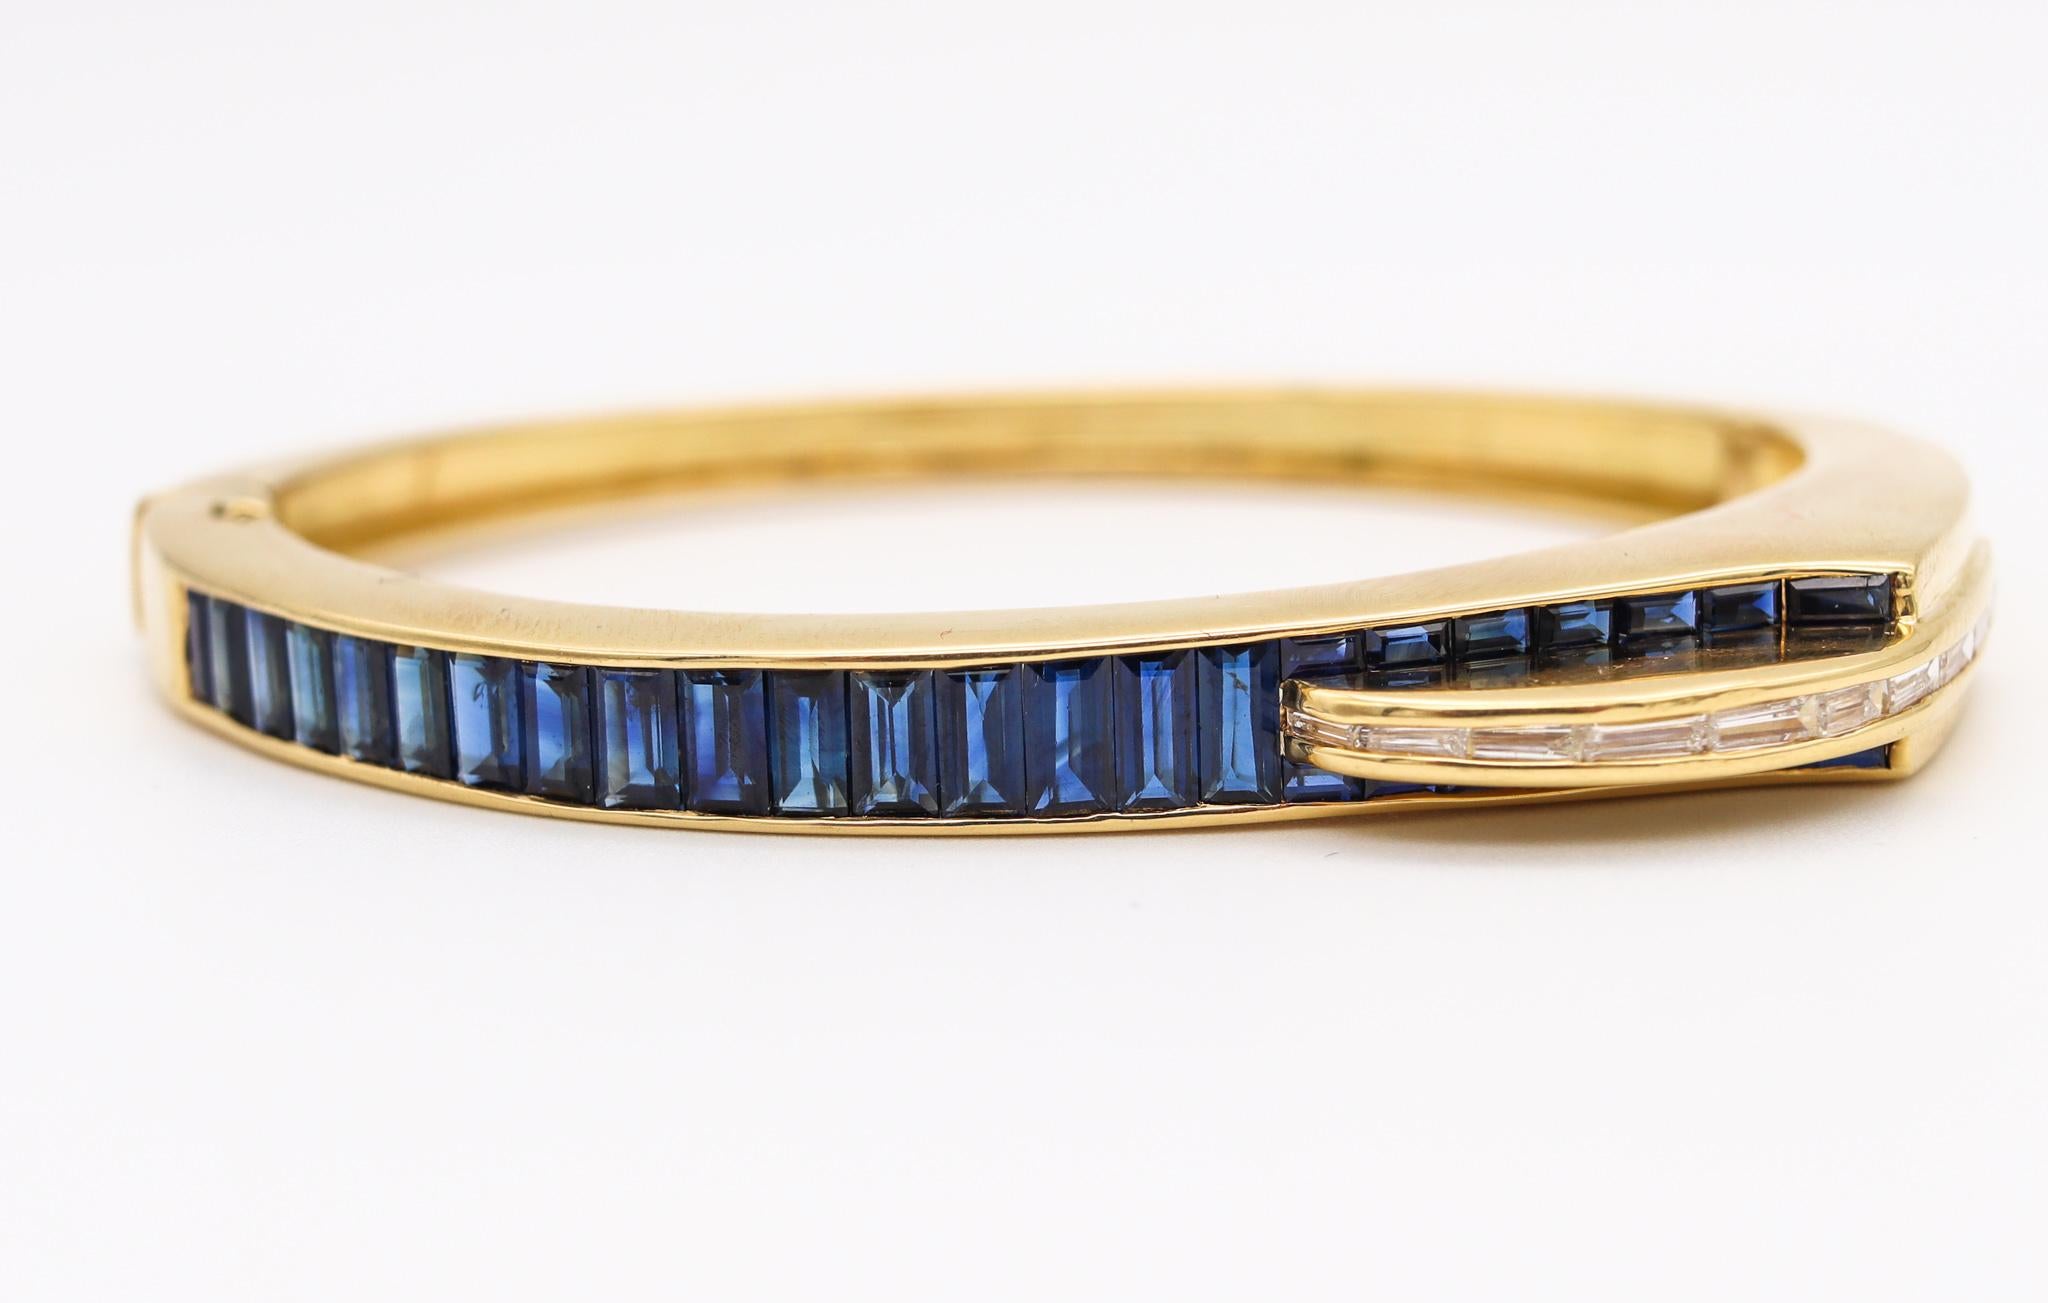 Baguette Cut Gubelin Swiss 1970 Geometric Modernist Bracelet in 18Kt Gold 8.71 Cts Gemstones